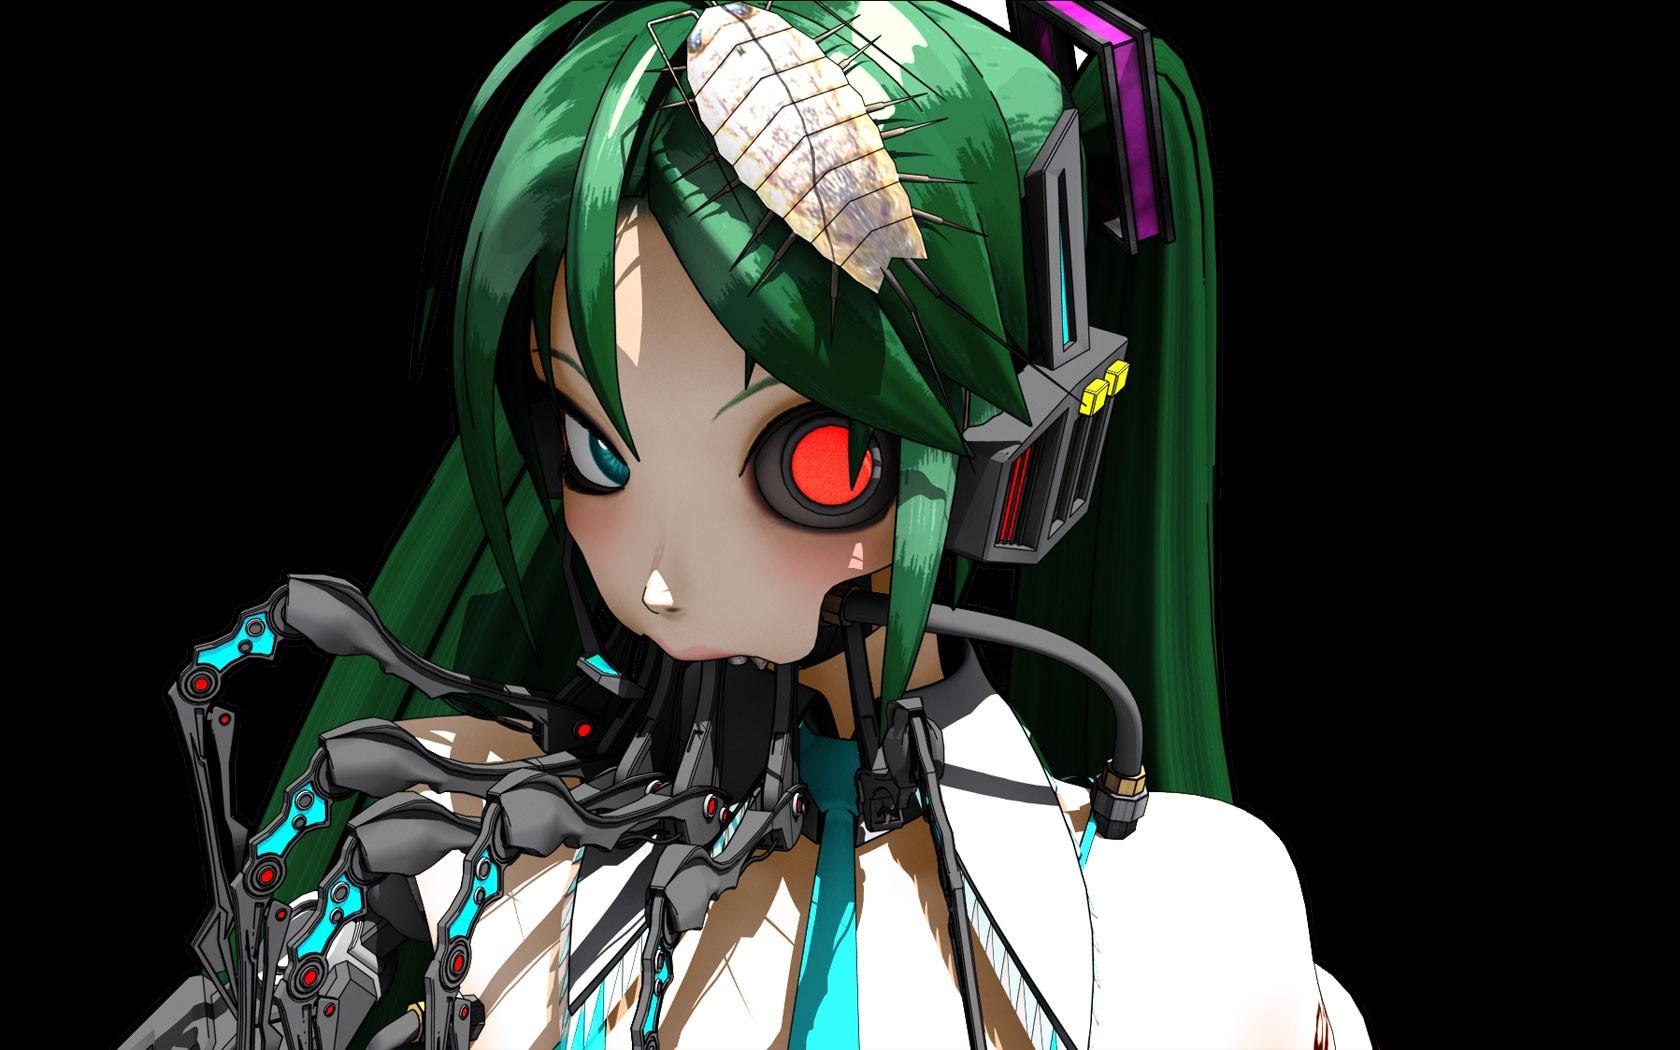 Anime Miku Vocaloid Creepy Robot Cyborg sci fi science fiction color mech tech digital elect wallpaperx1050